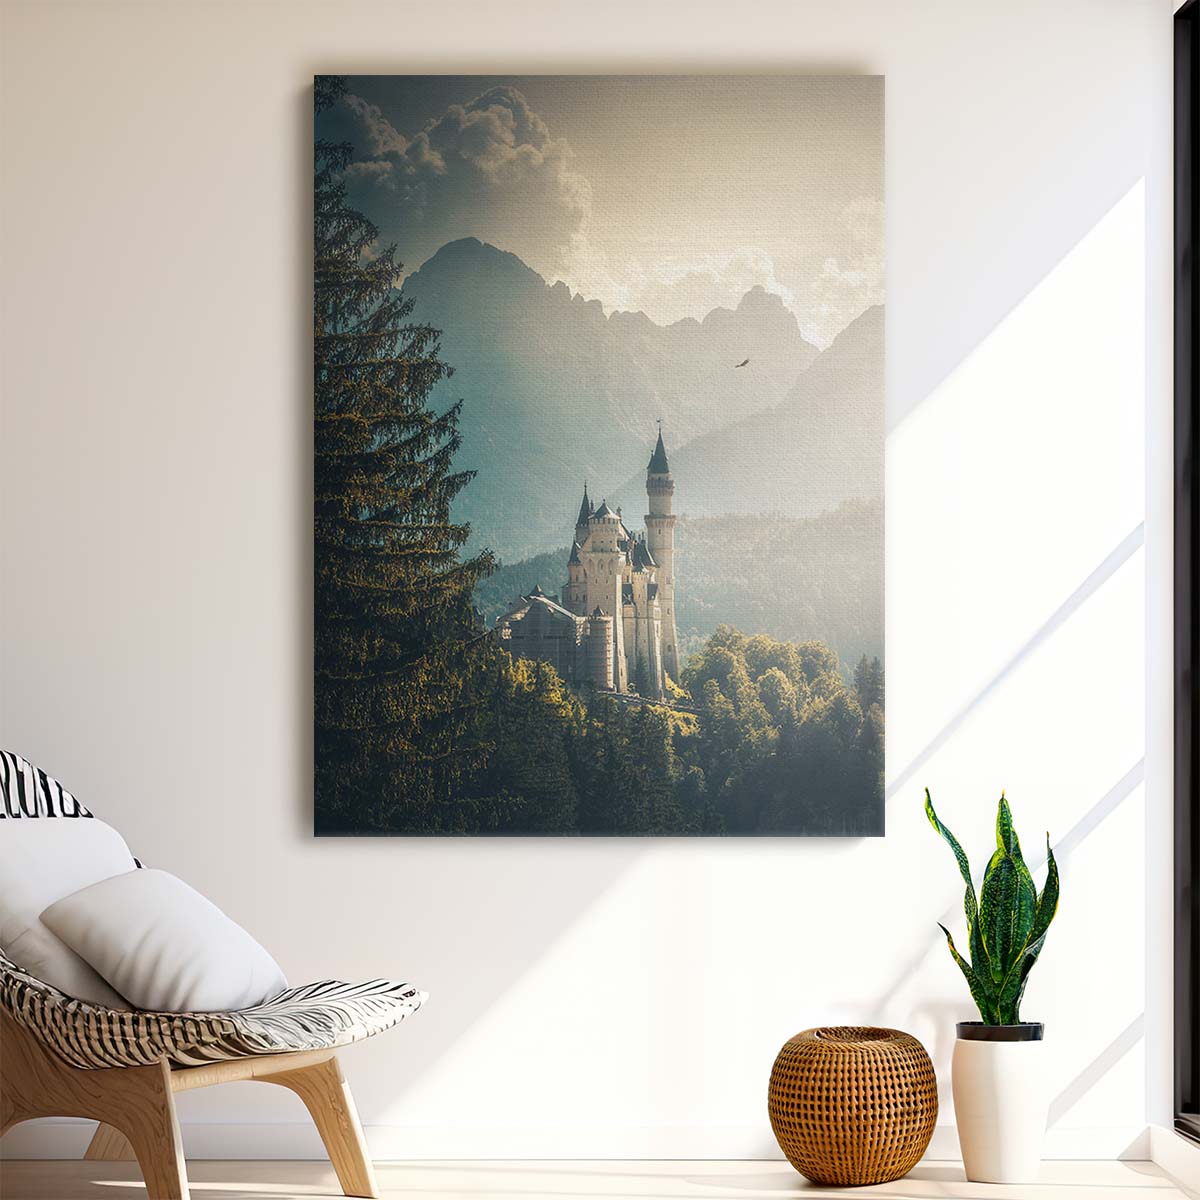 Medieval Neuschwanstein Castle Landscape Photography Wall Art by Luxuriance Designs, made in USA